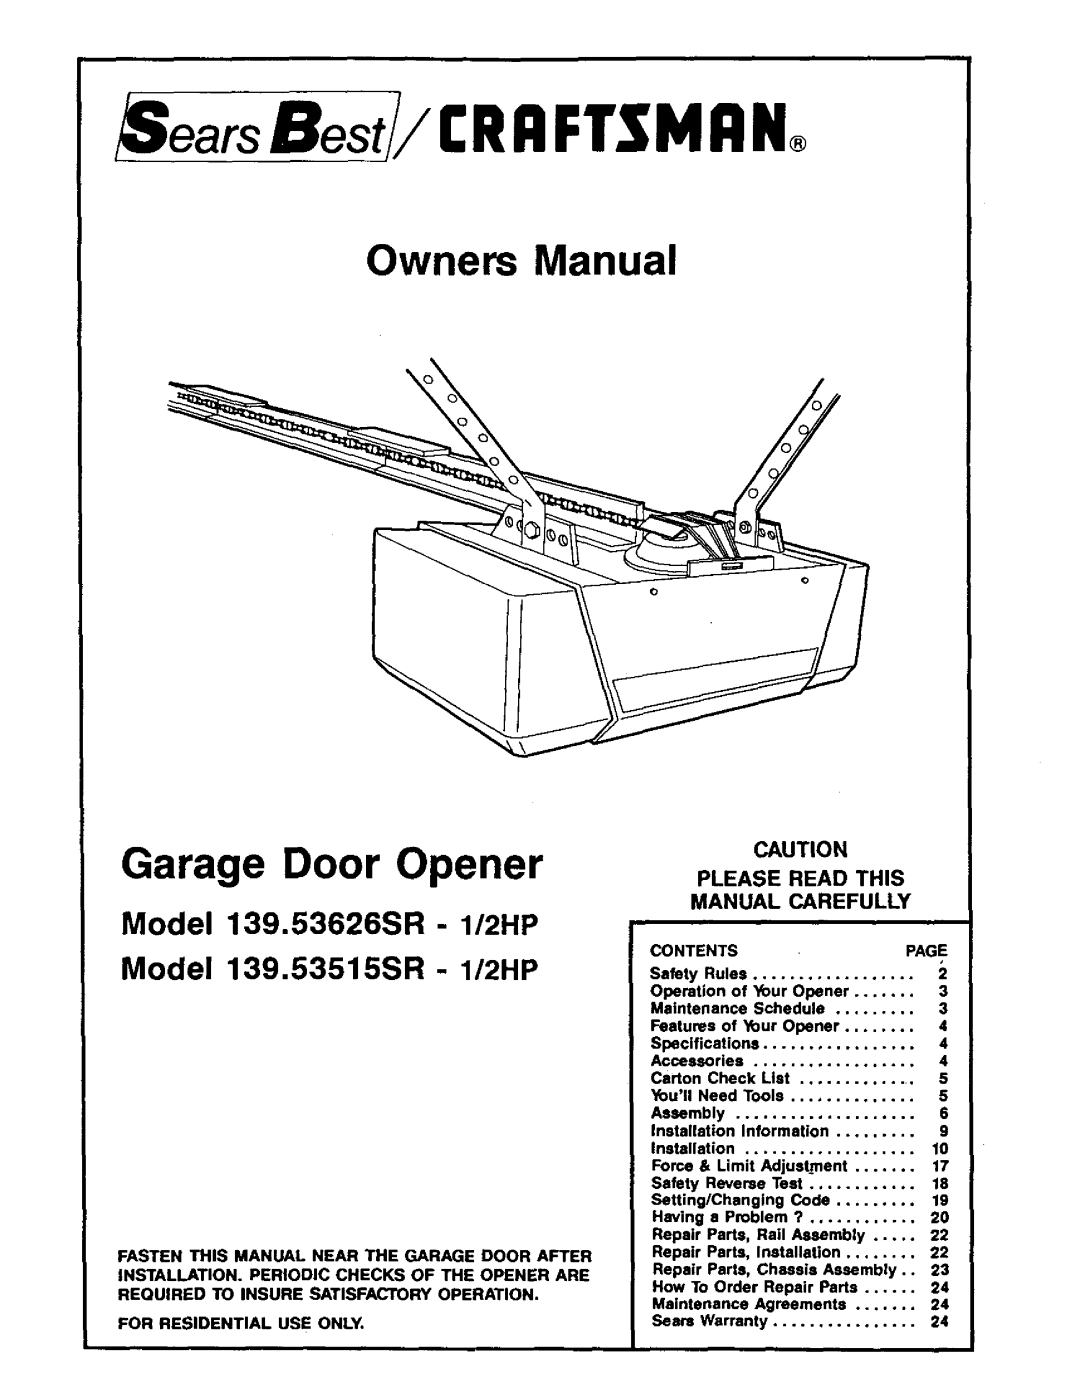 Craftsman owner manual Model 139.53626SR - I/2HP Model 139.53515SR - I/2HP, Please Read This Manual Carefully, Schedule 